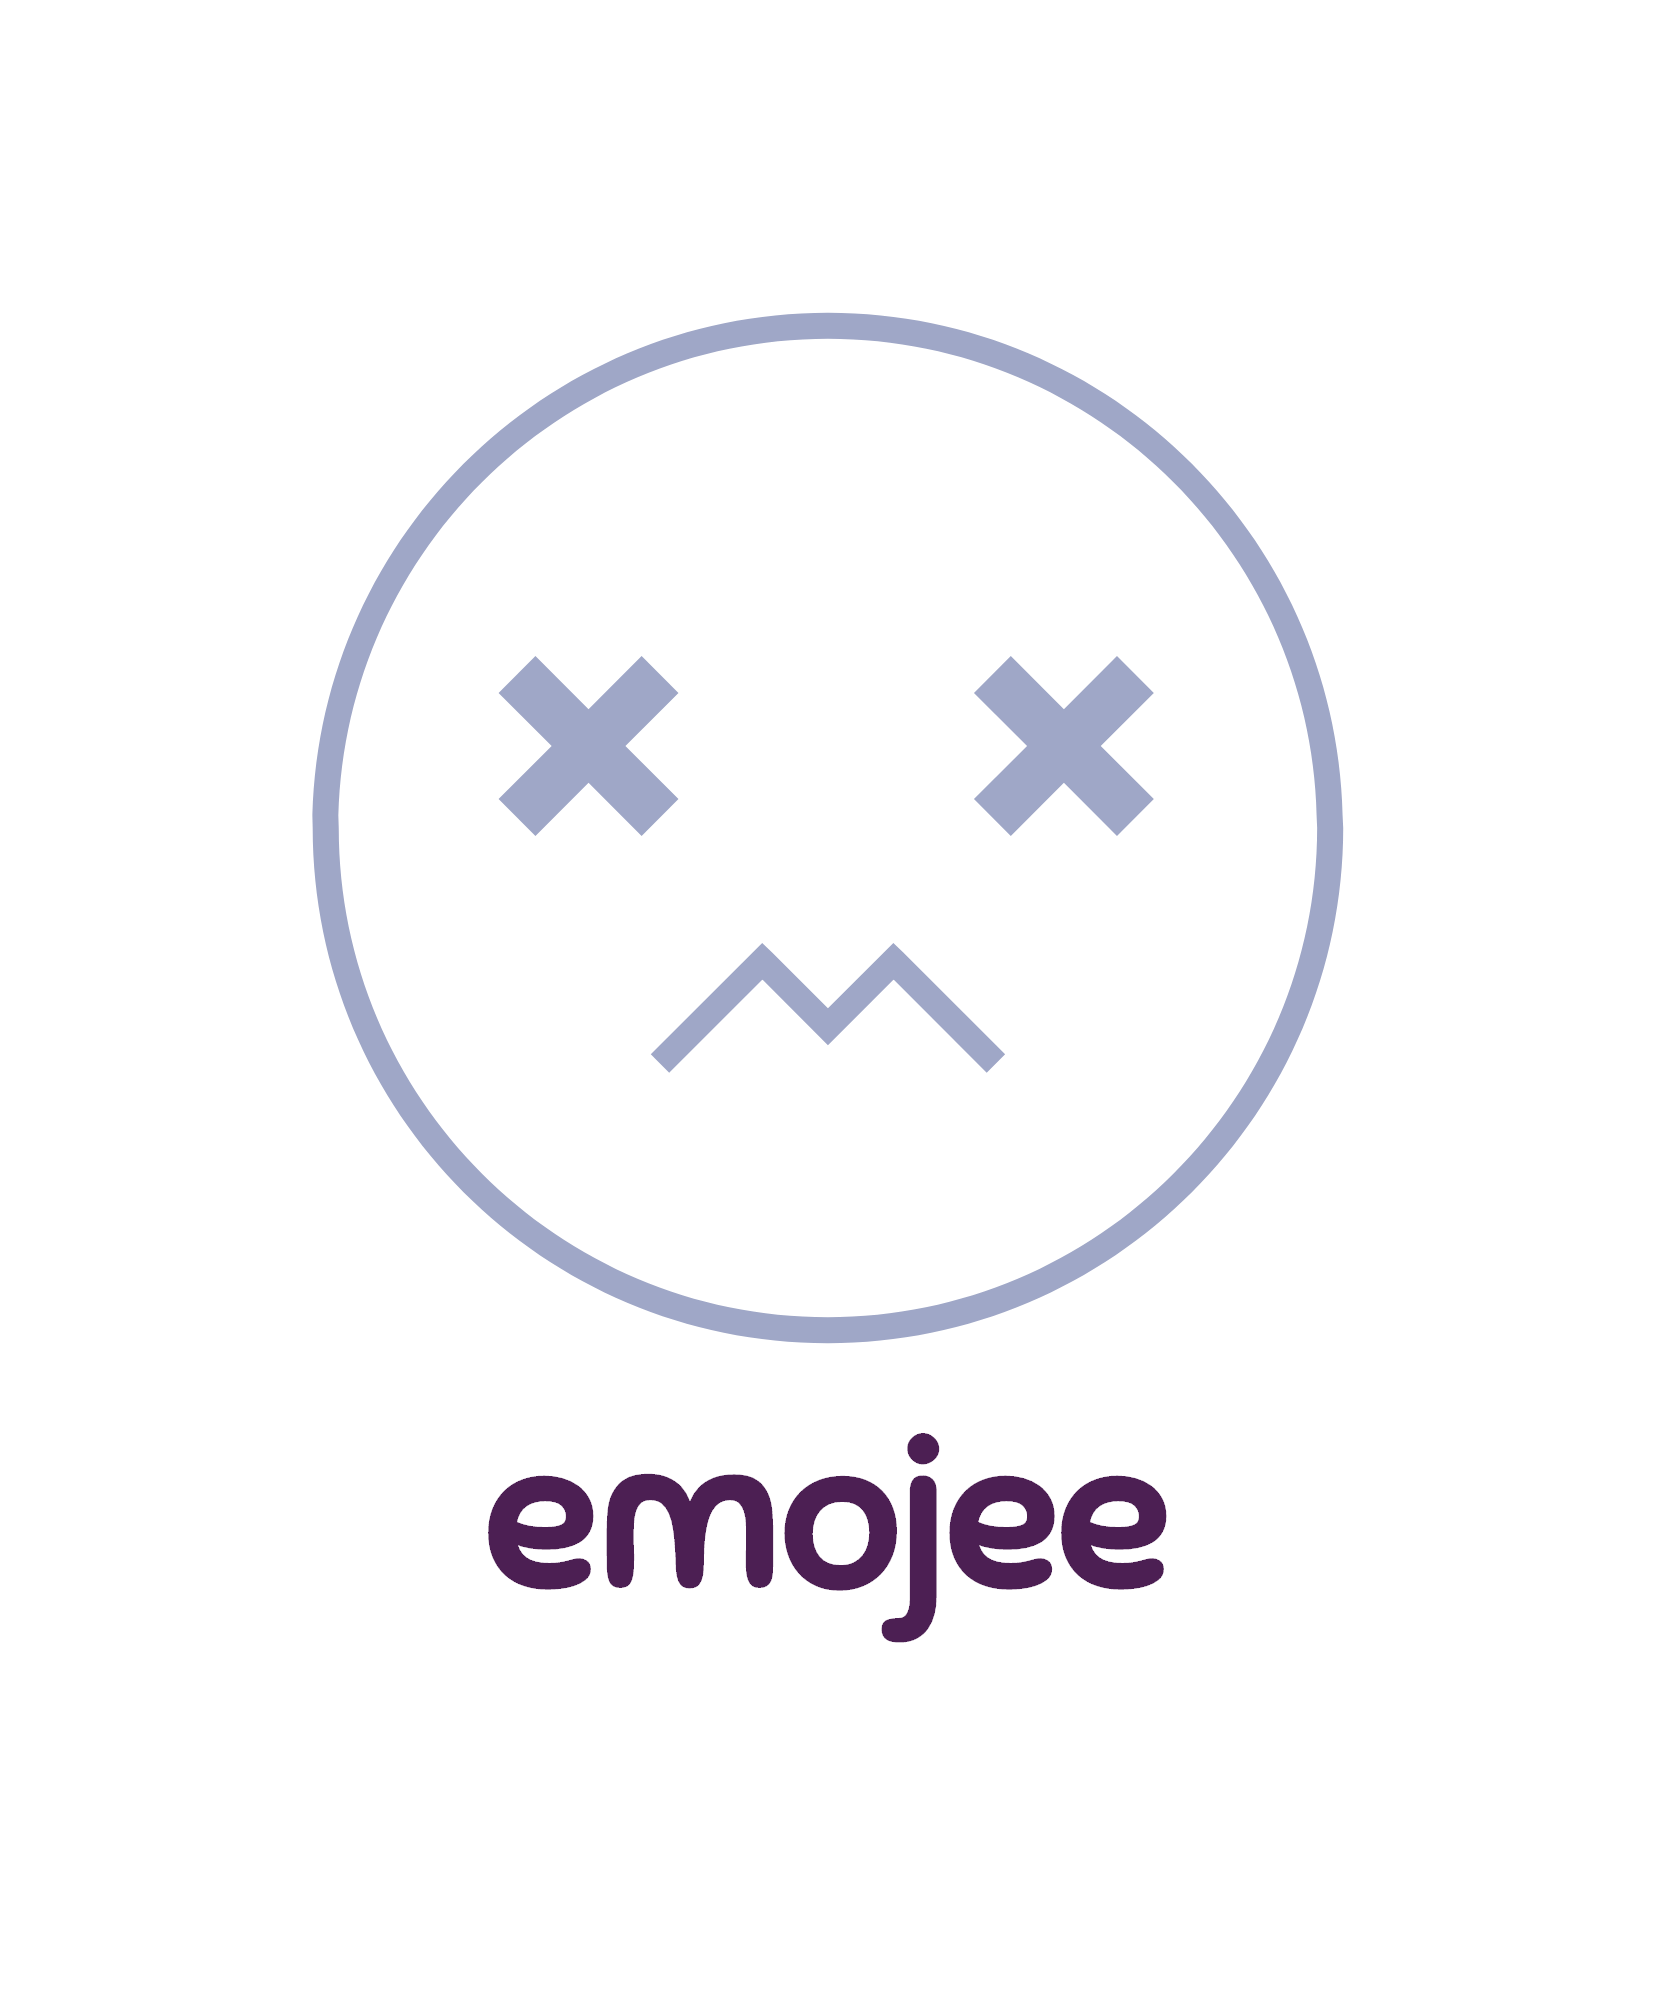 Emojee (Copy)